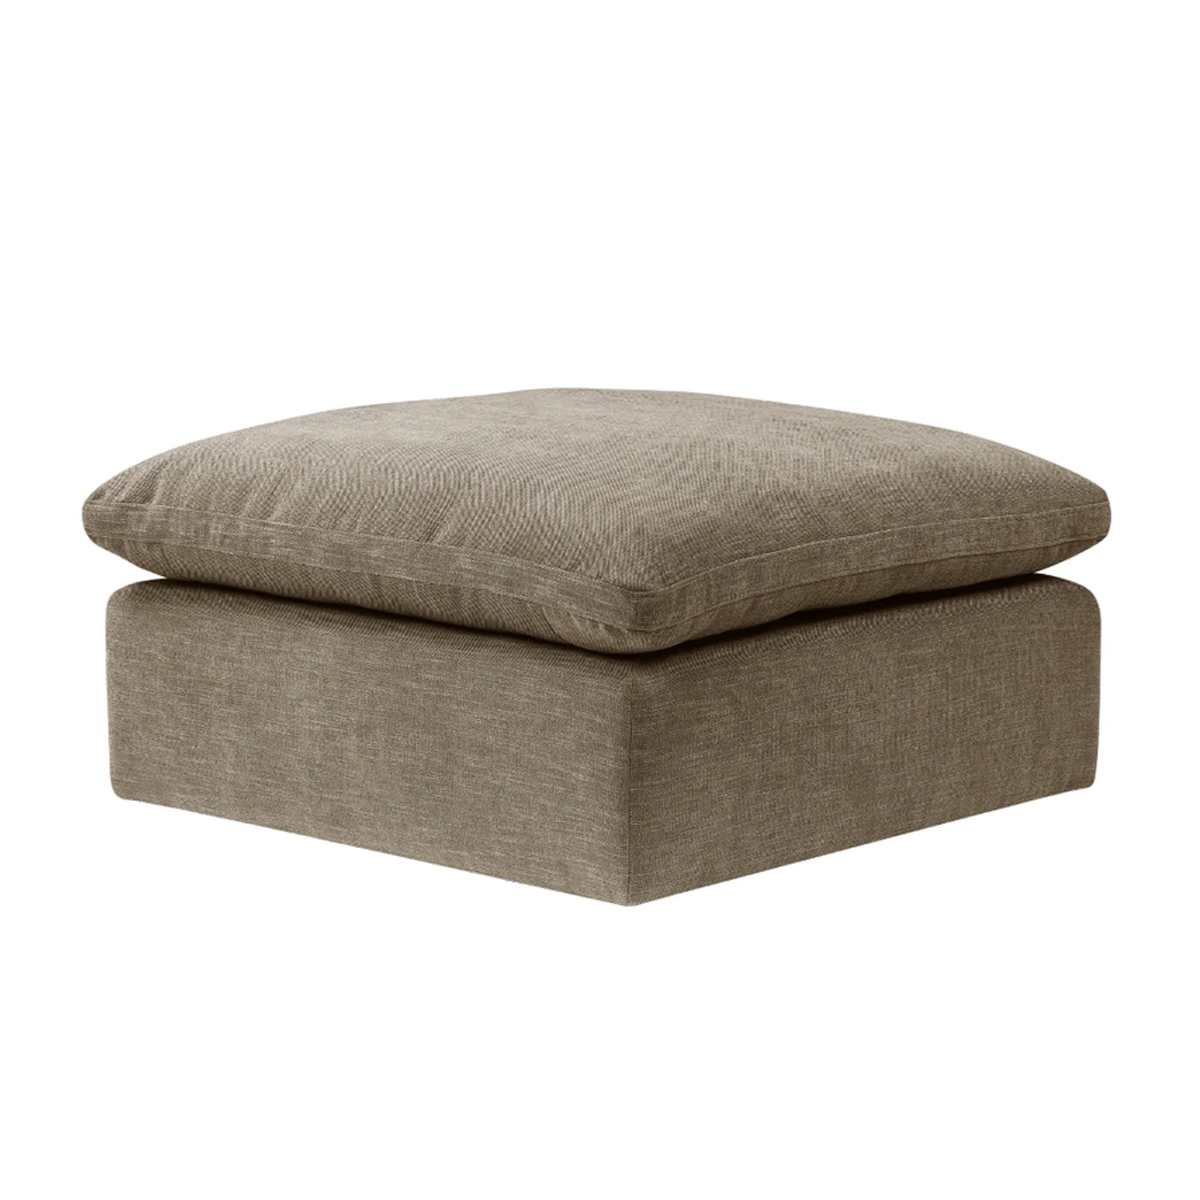 Scott 37 Inch Square Ottoman, Removable Pillow Top Cushion, Beige- Saltoro Sherpi